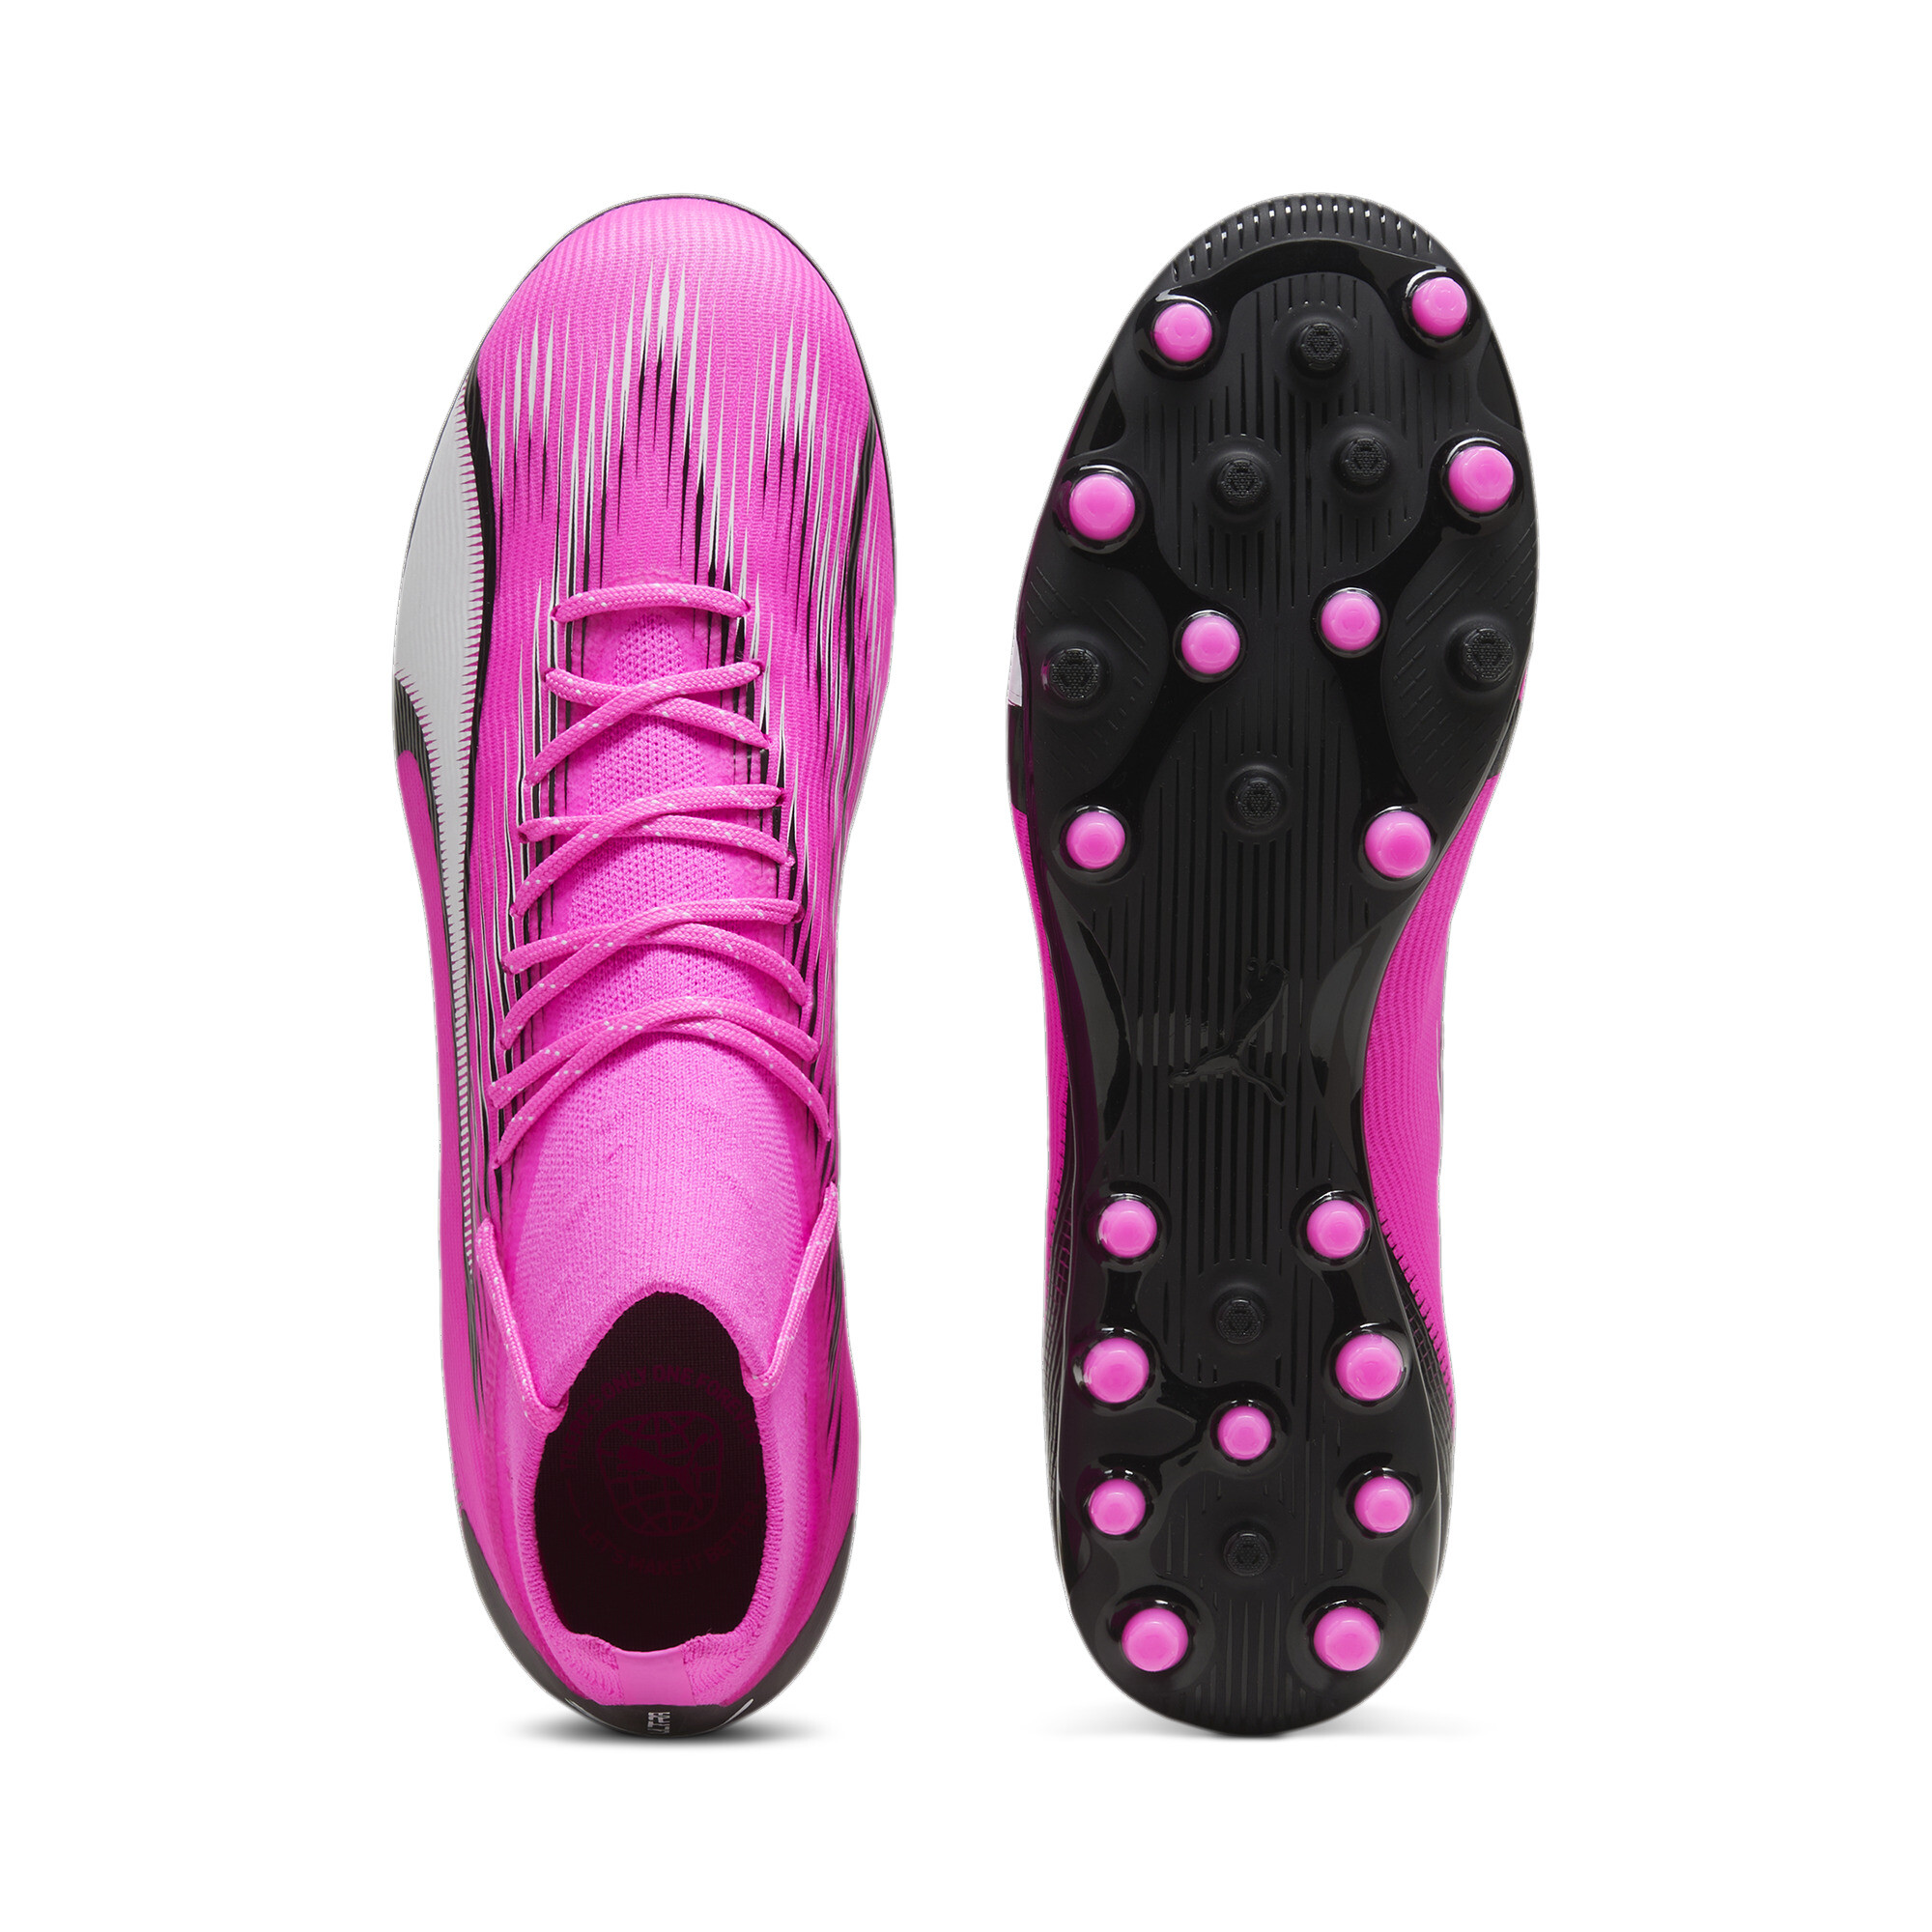 Men's Puma ULTRA PRO MG Football Boots, Pink, Size 44, Performance